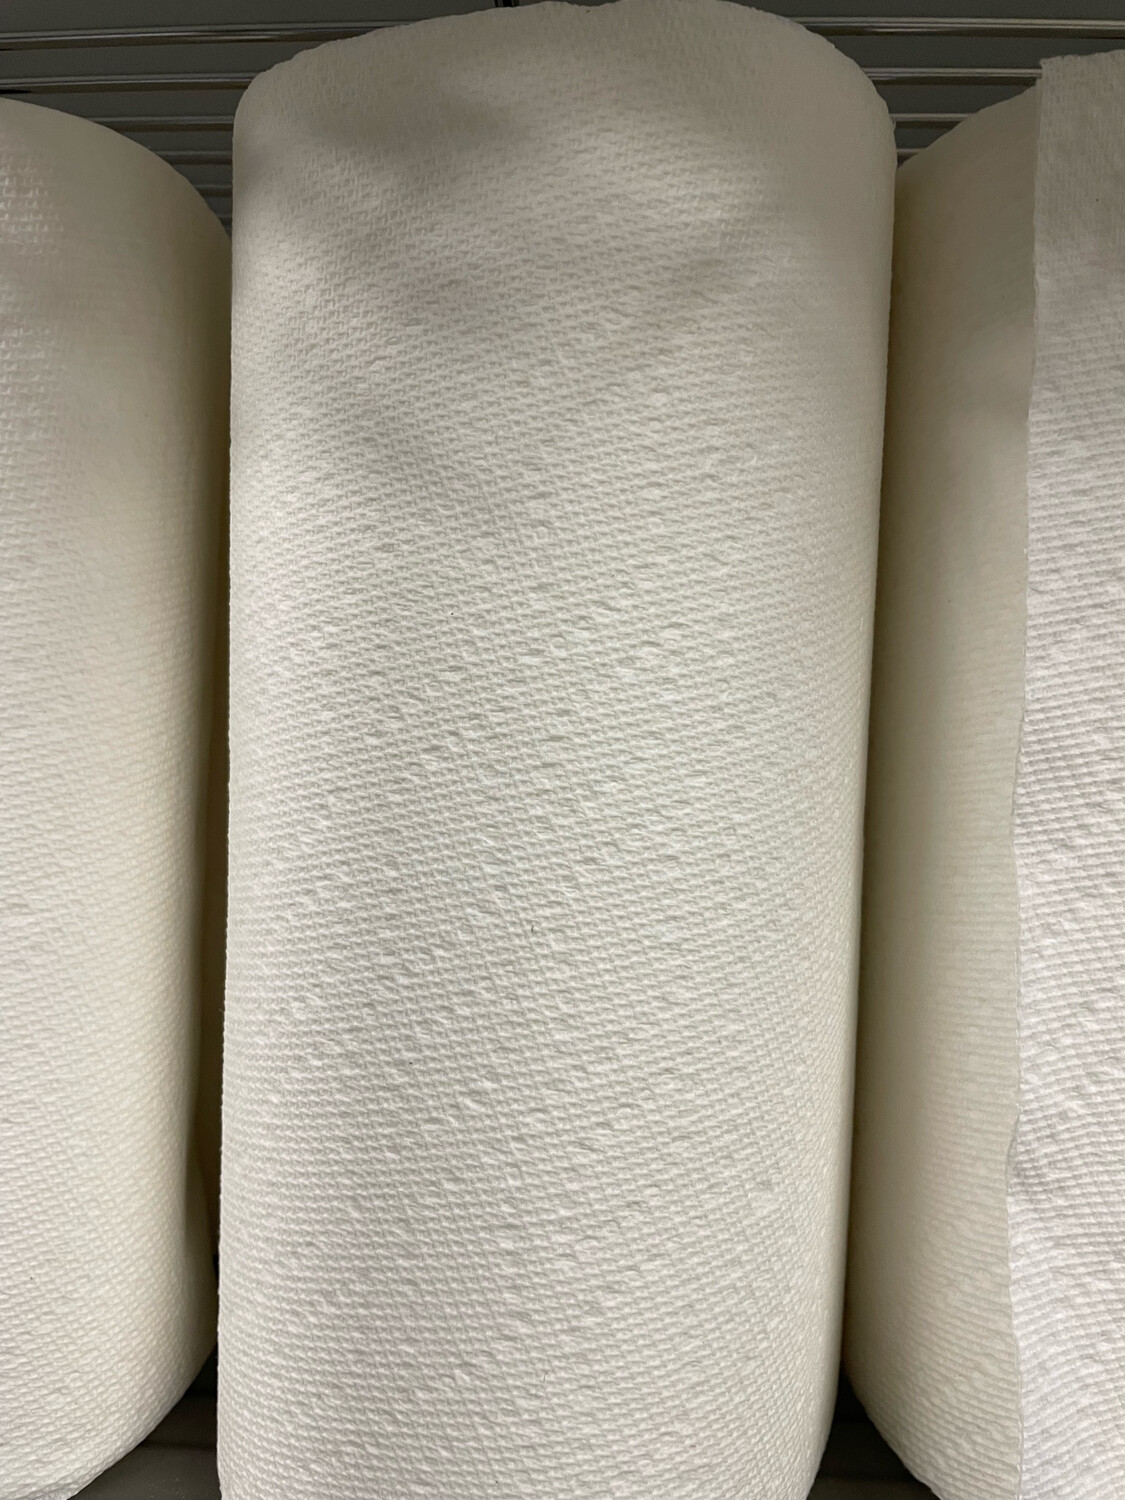 Paper Towels
(*LIMIT 1 per household*)